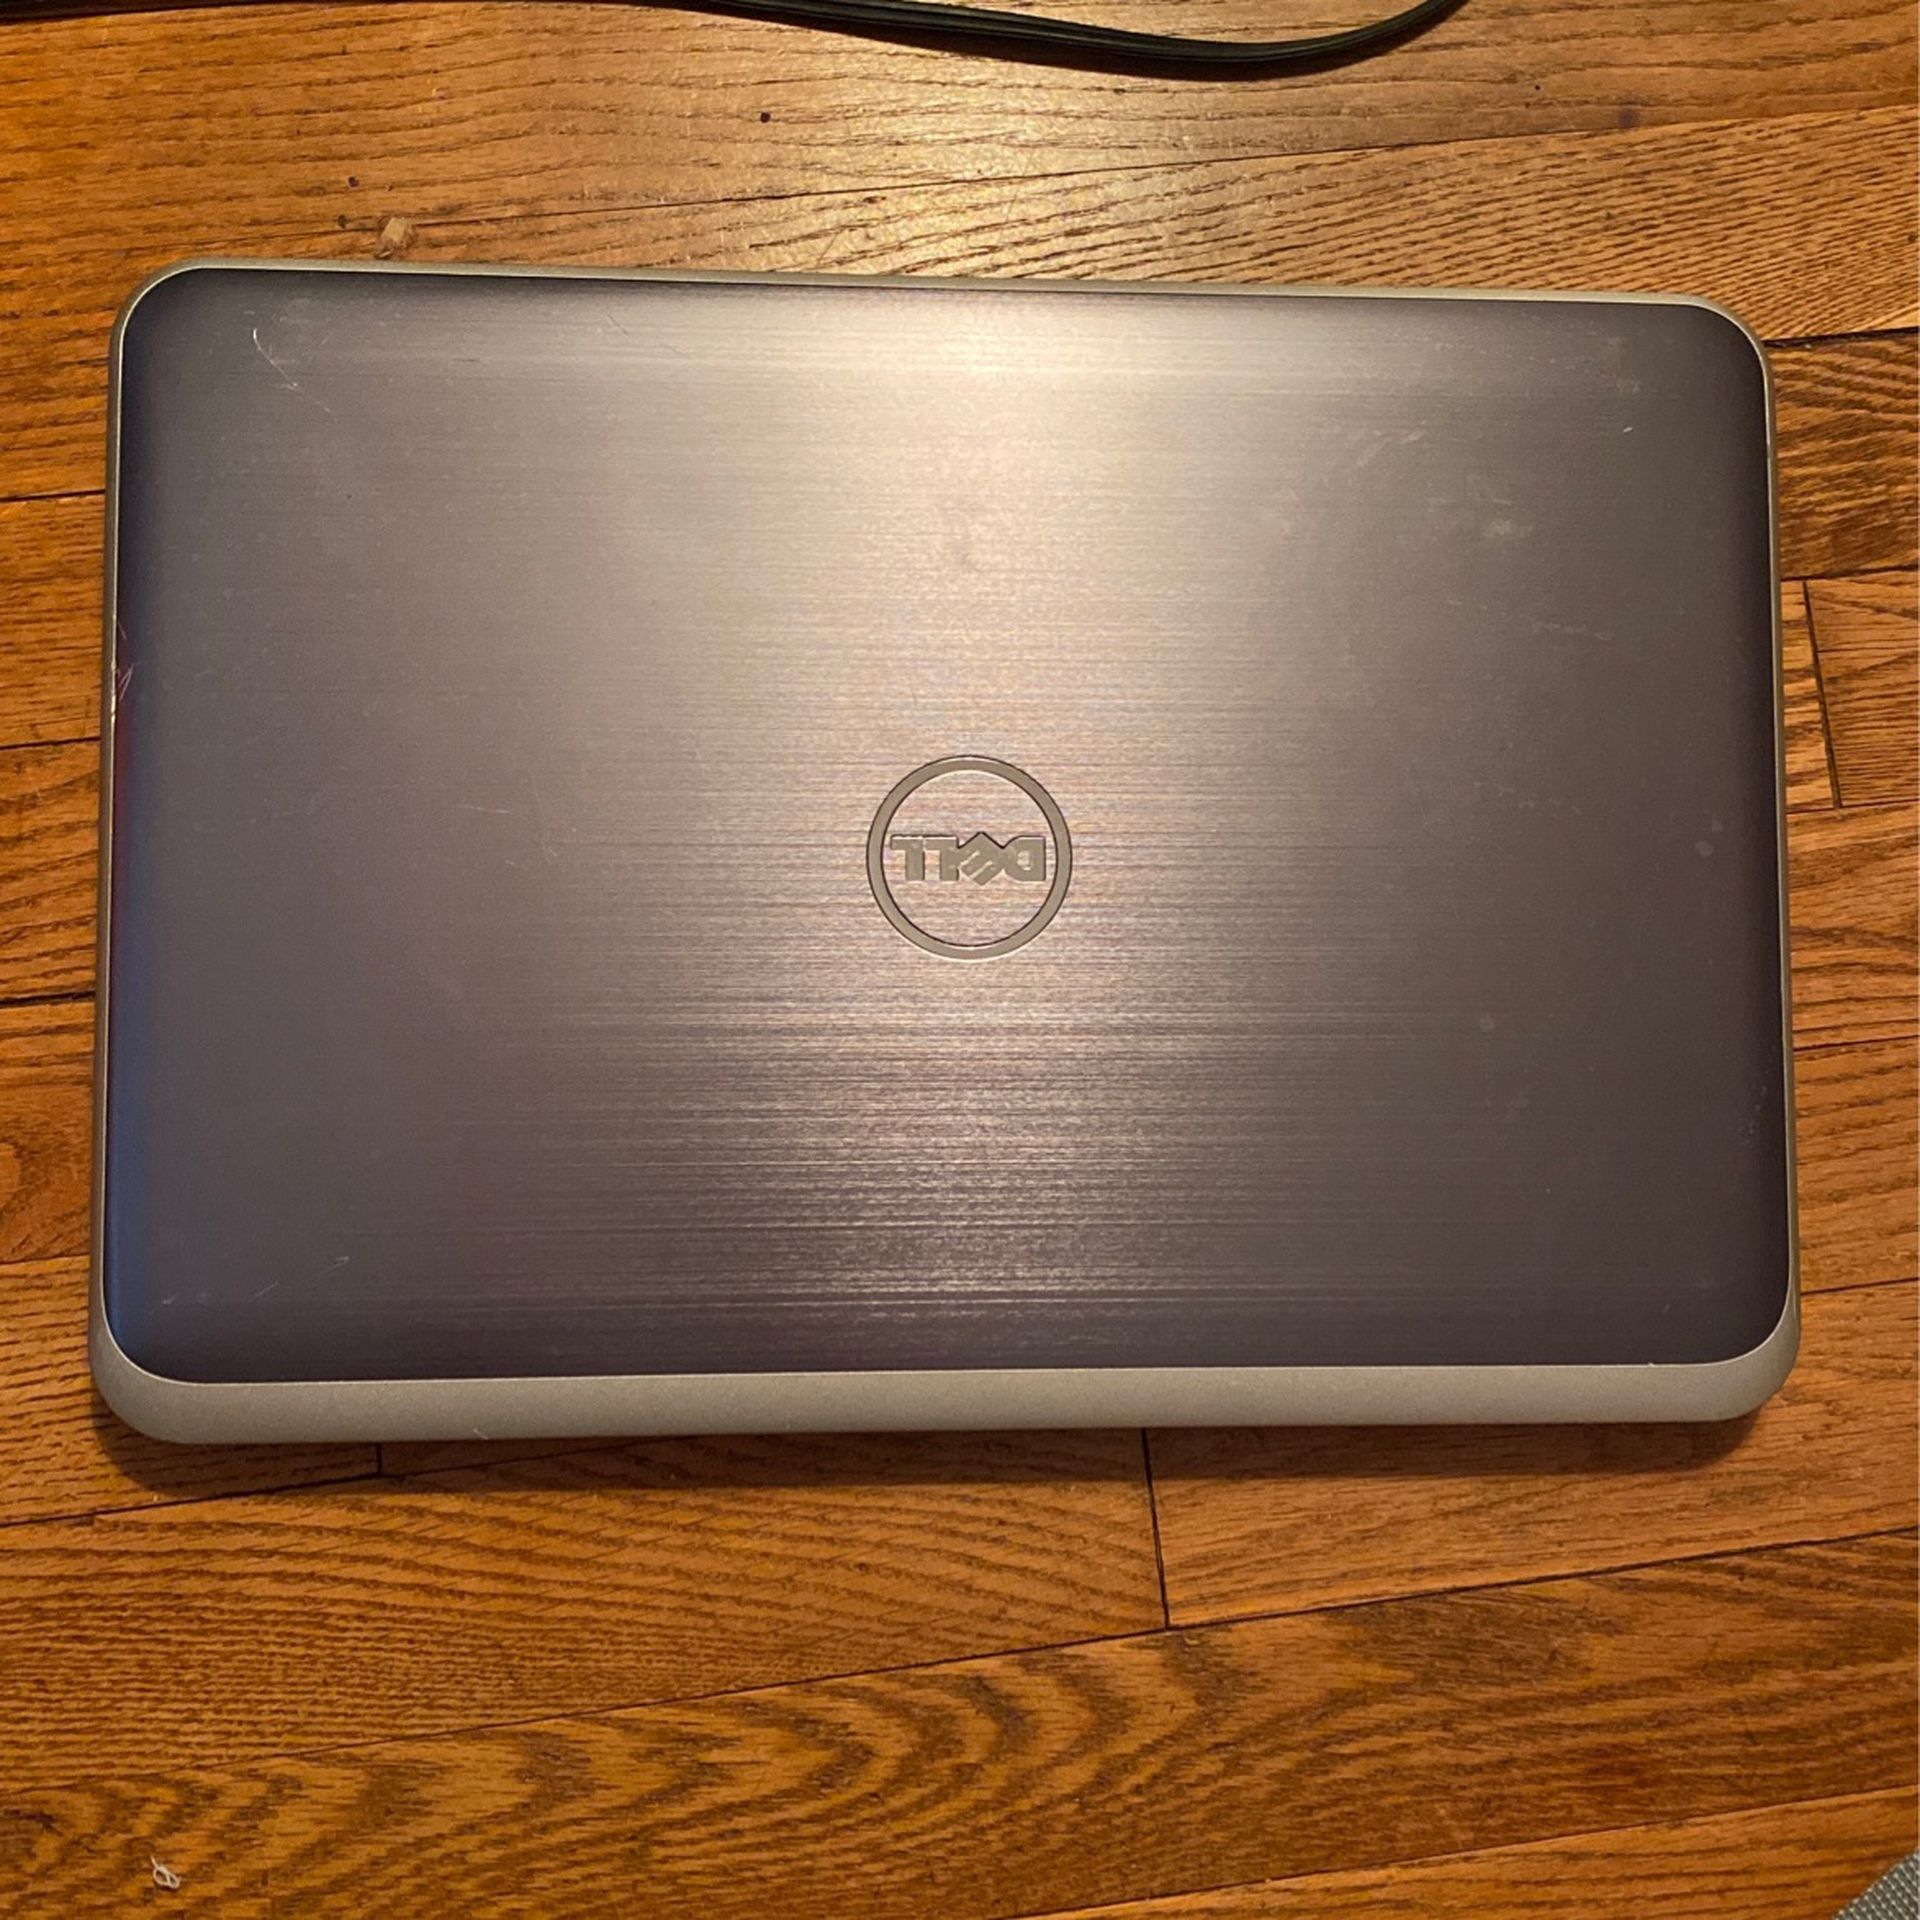 (Parts) Dell Core i5 Laptop